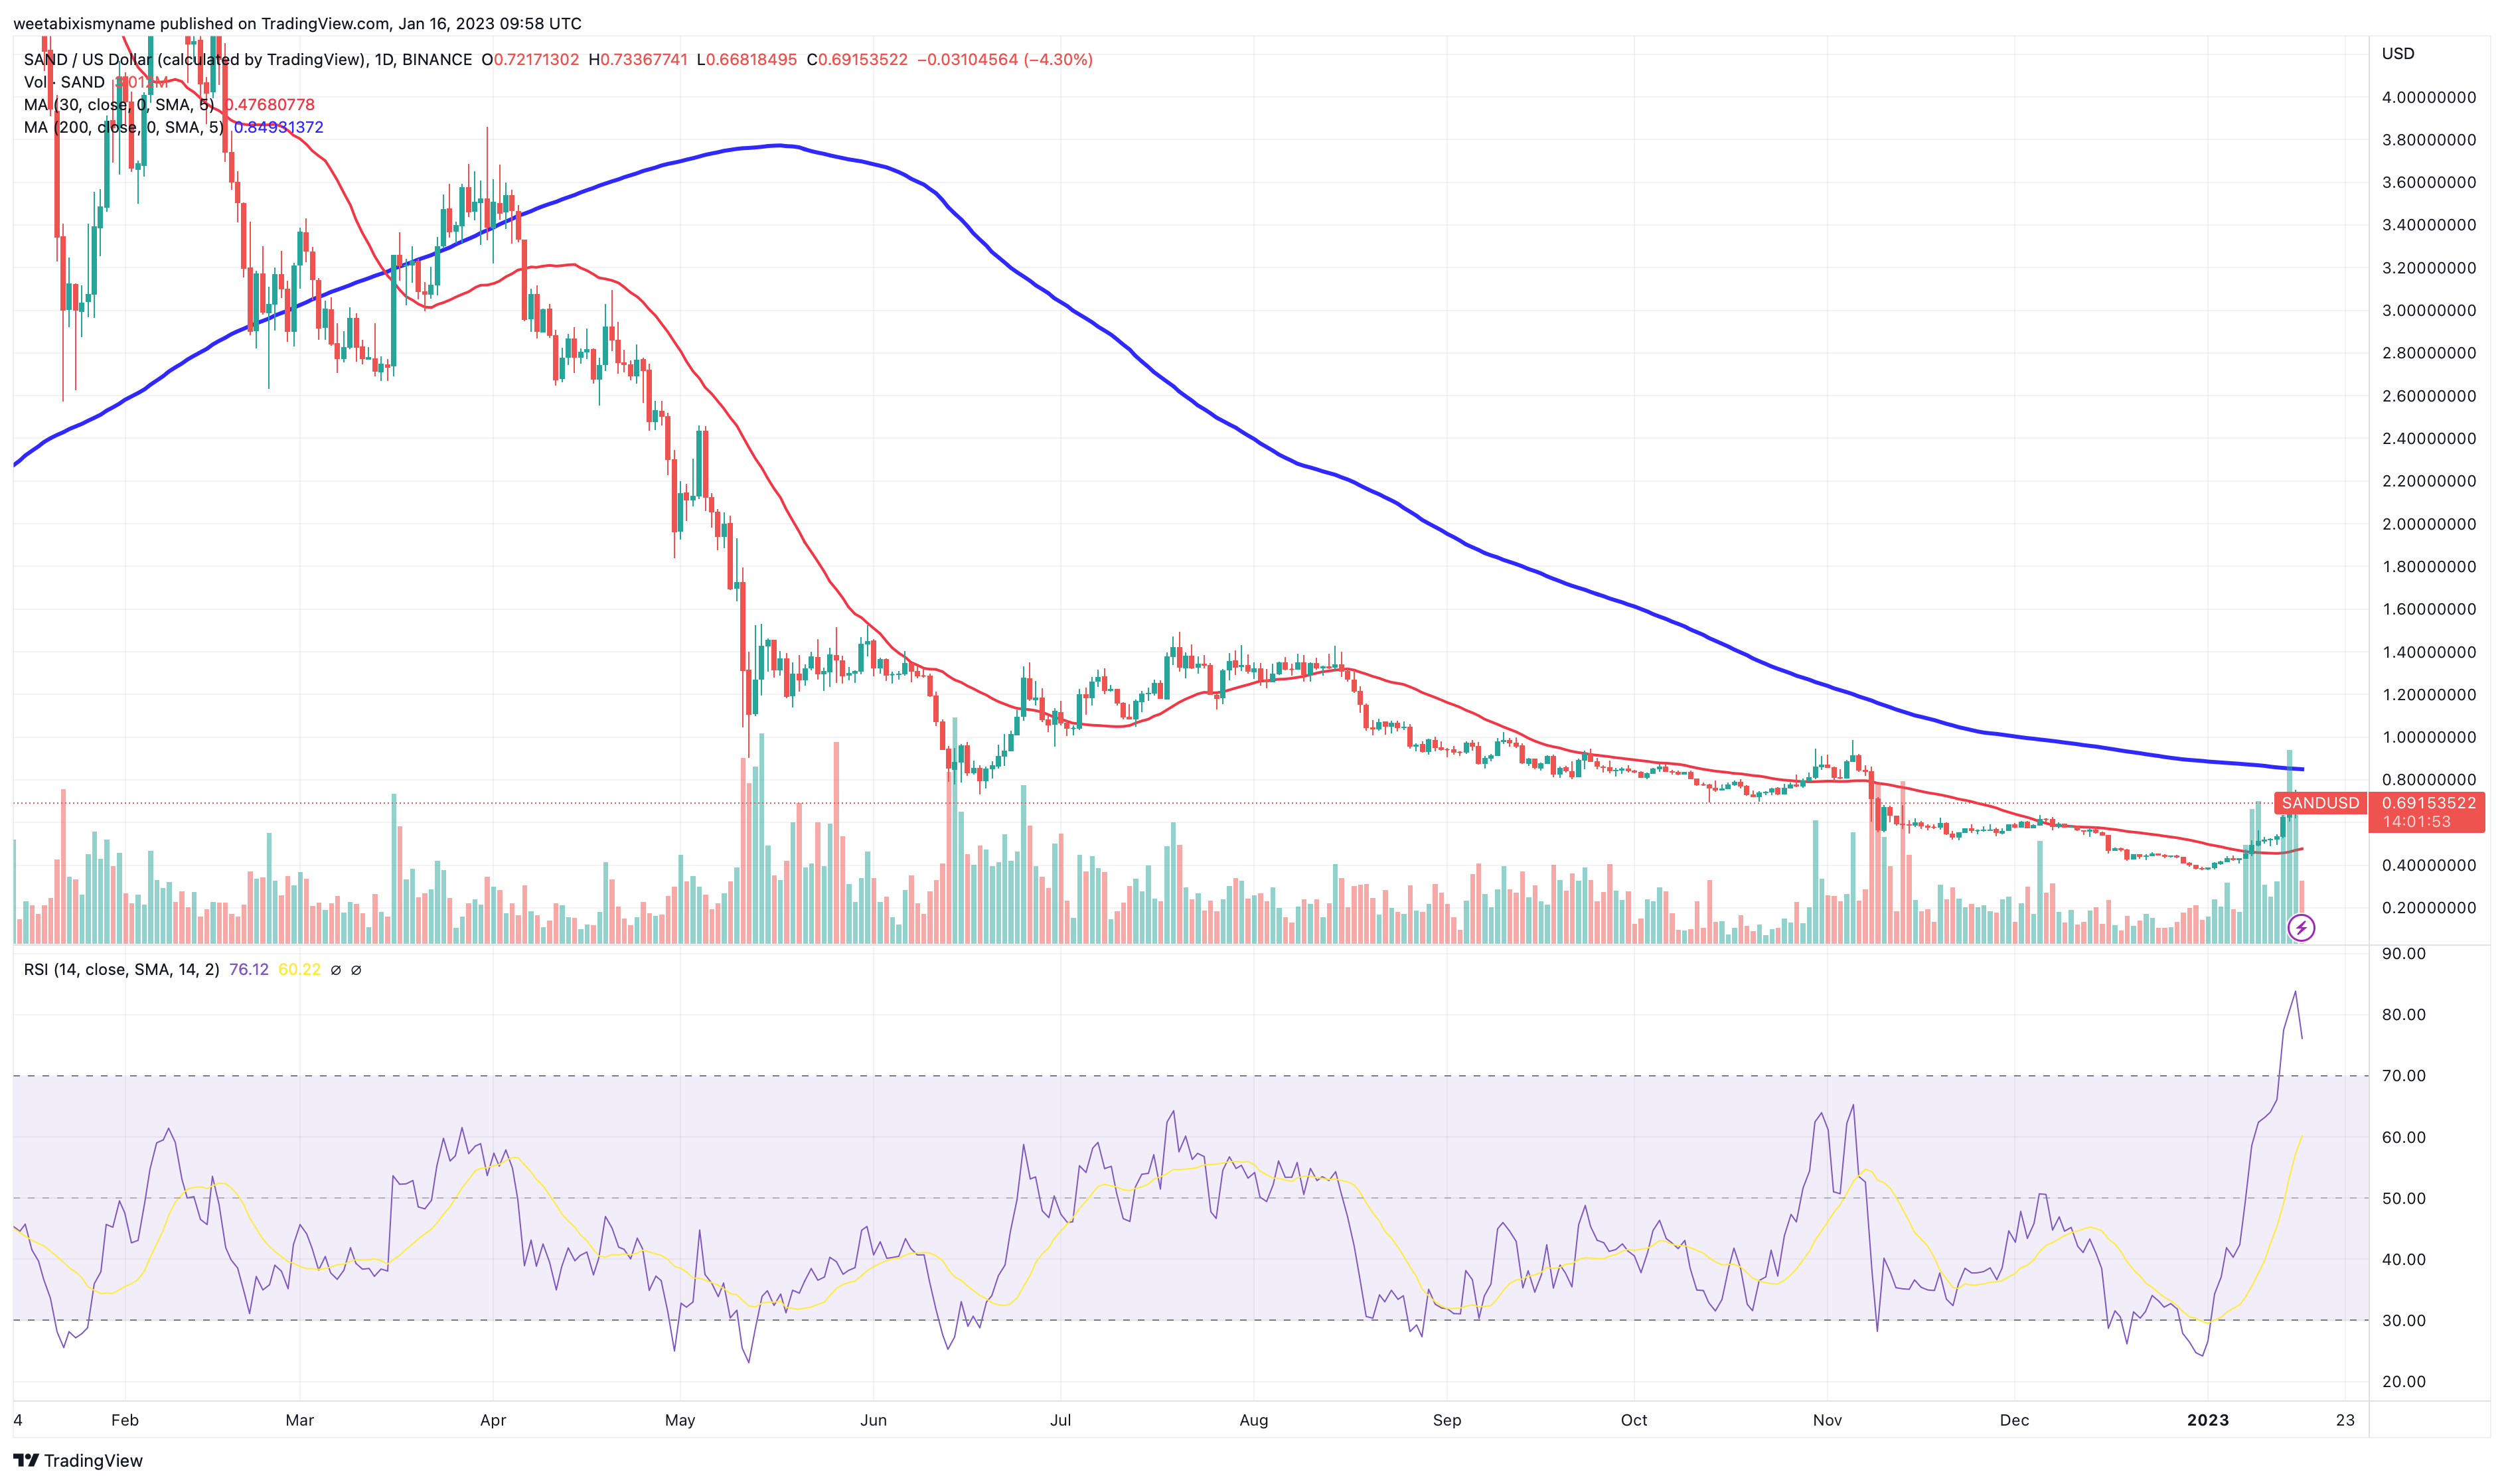 SAND/USD Chart - Source: TradingView